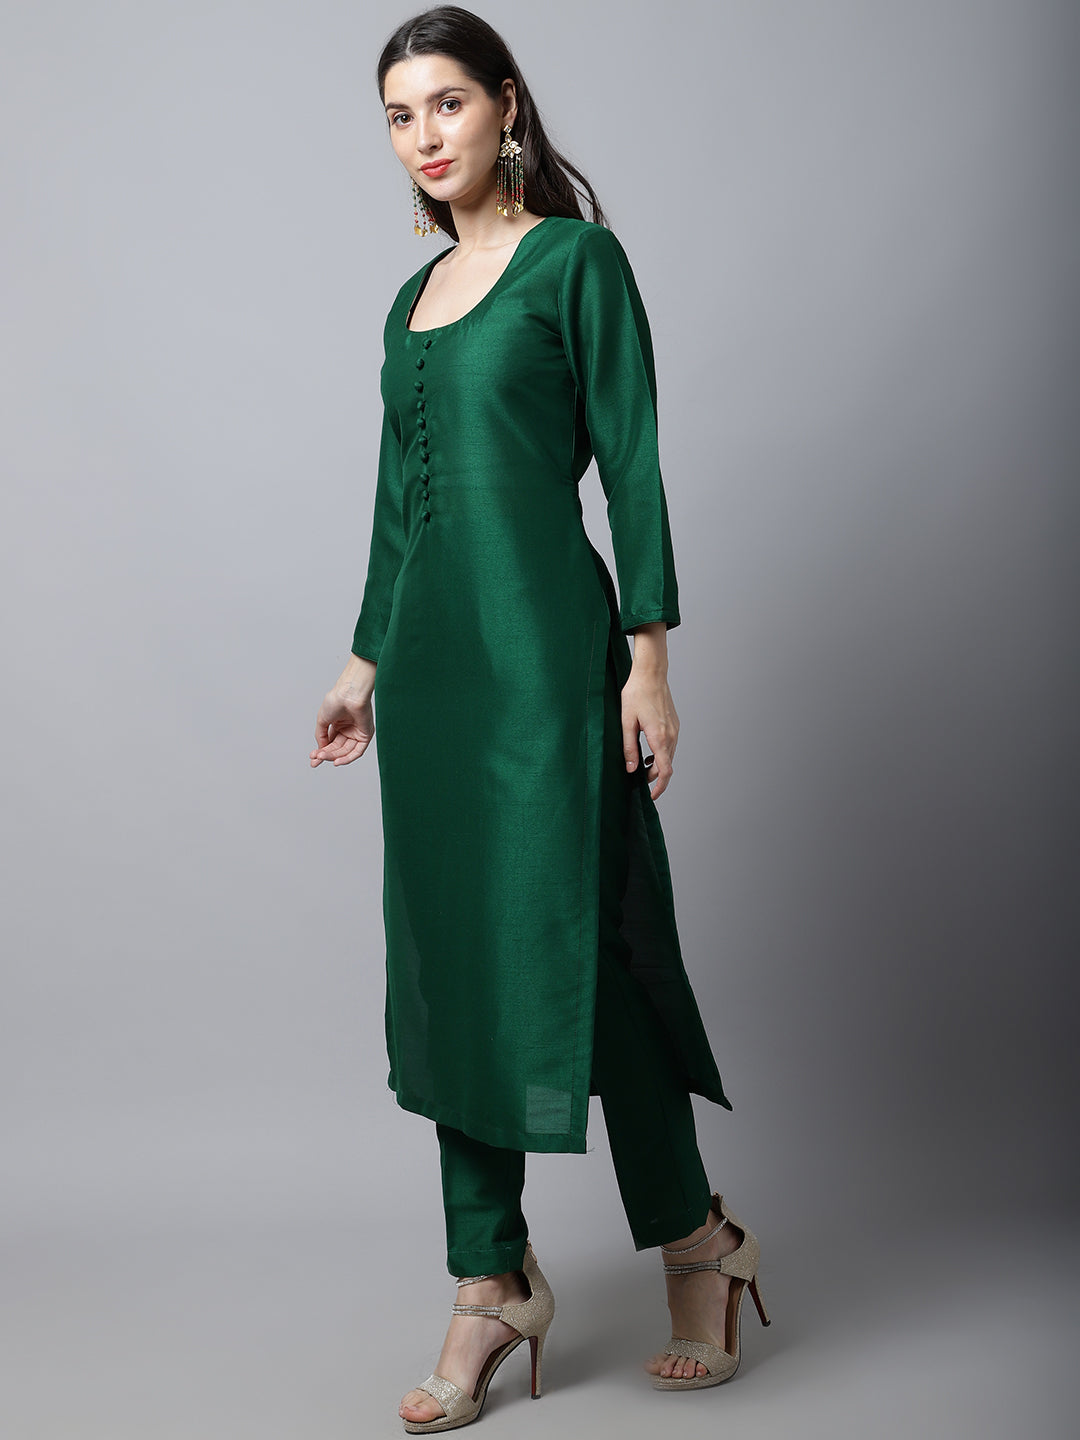 Buy INTUNE Green Pleated Women's Kurti | Shoppers Stop